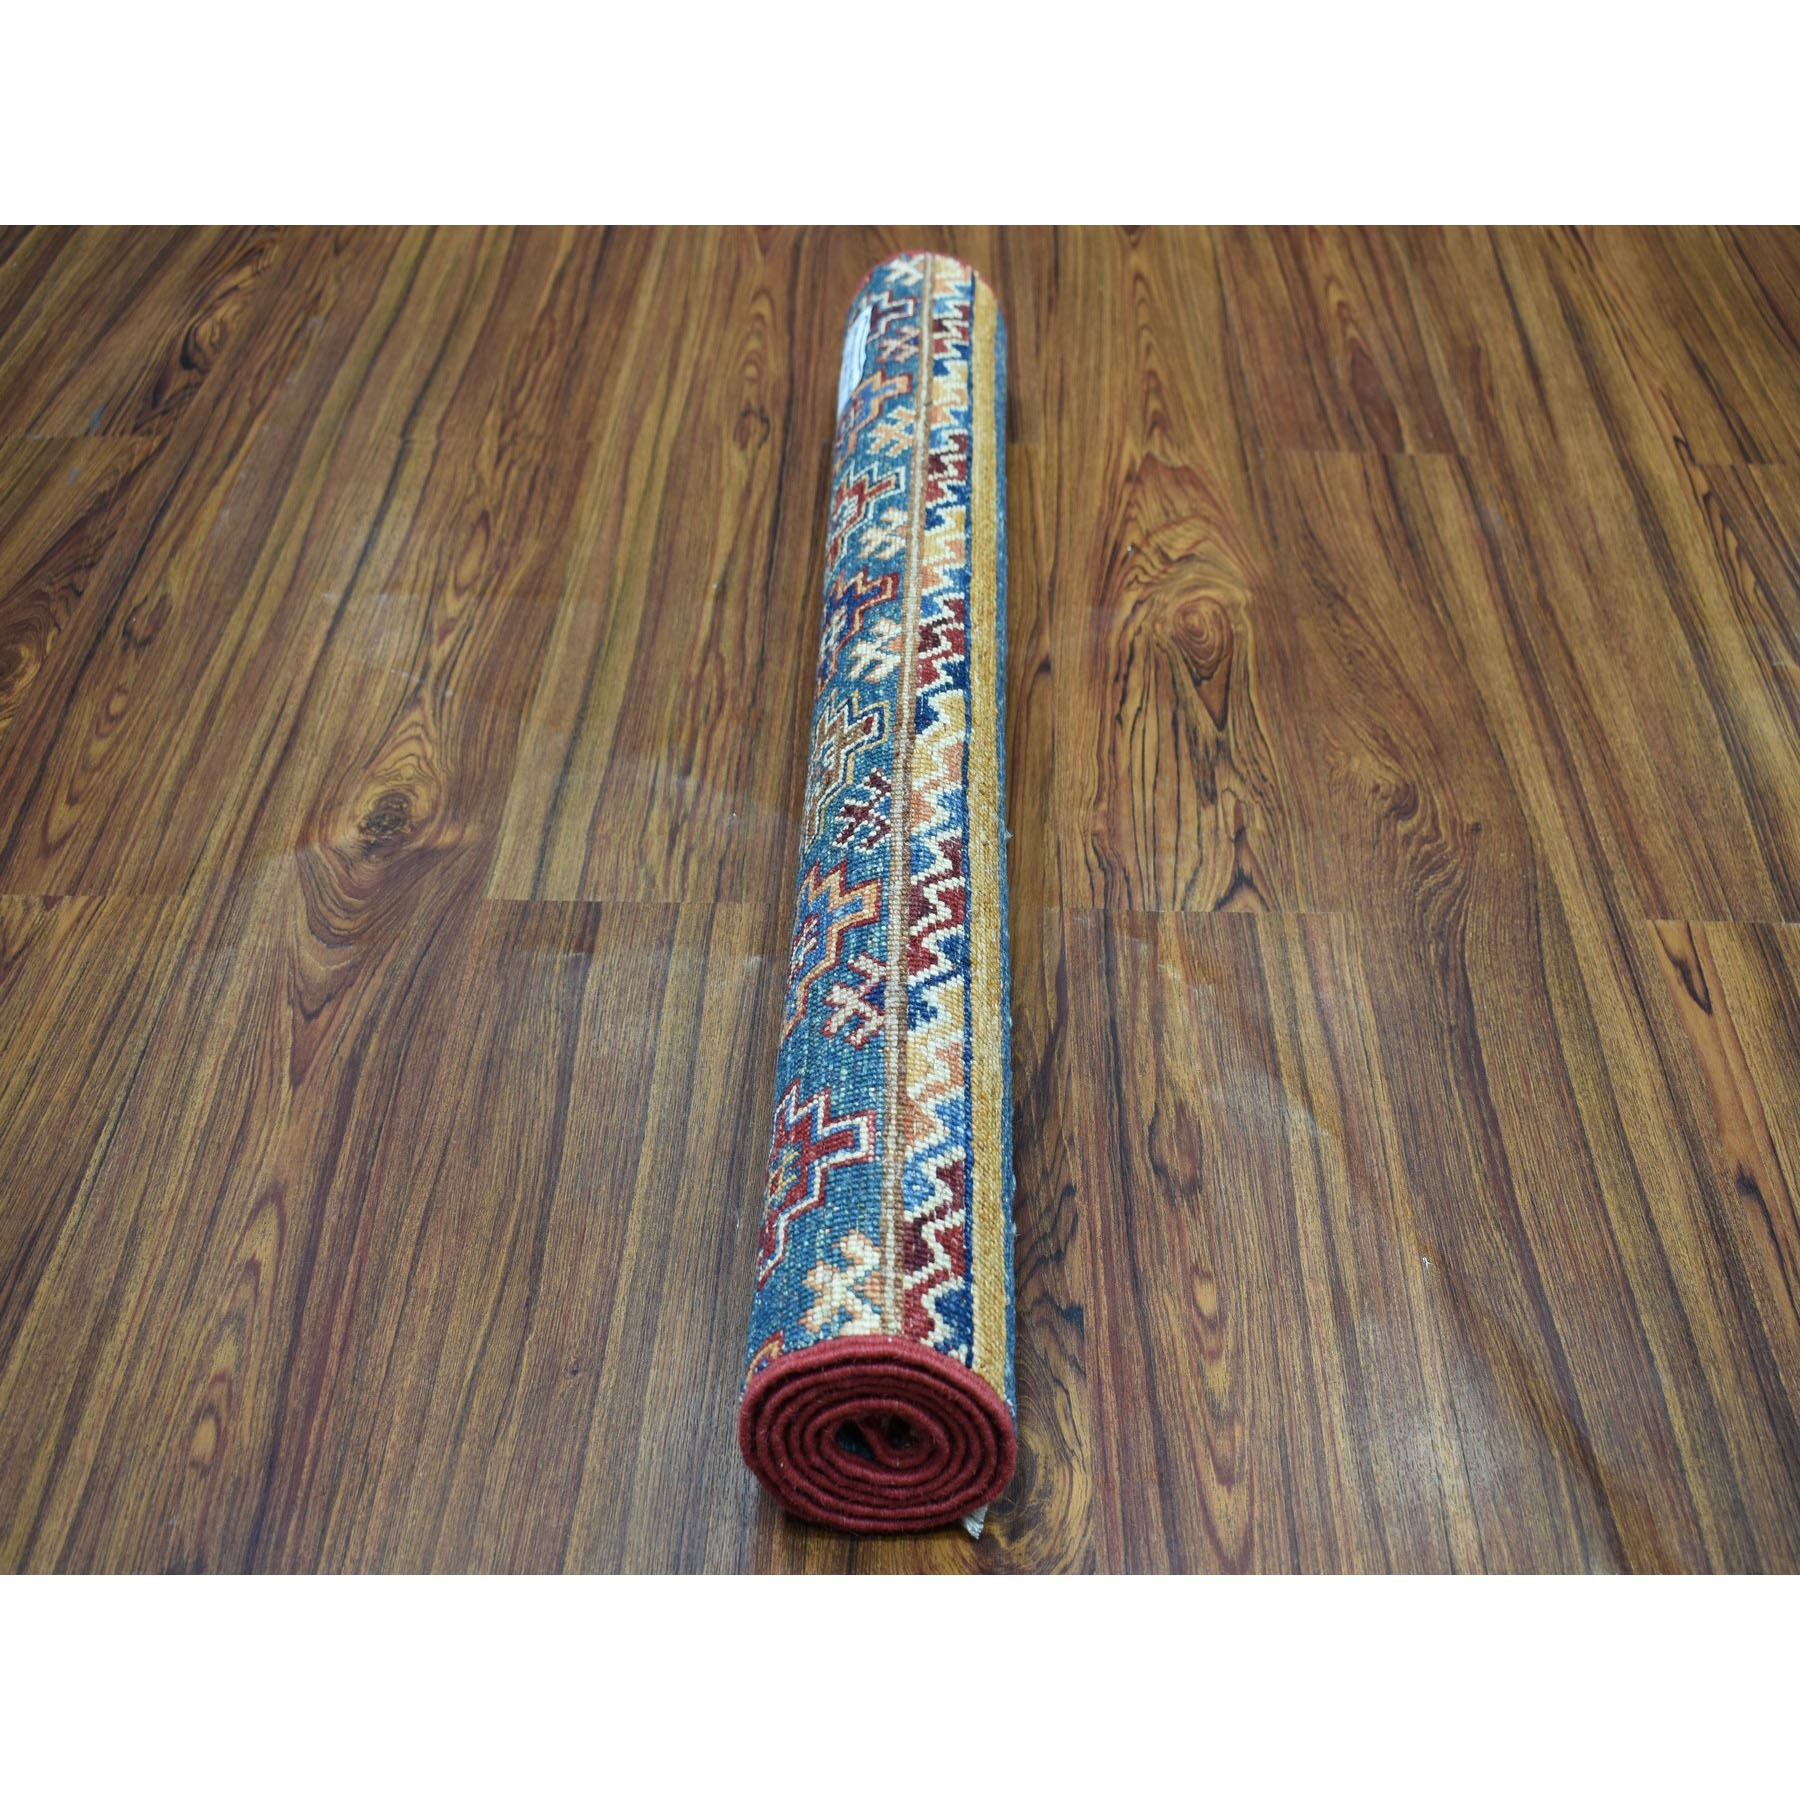 2-10 x4-4  Khorjin Design Colorful Super Kazak Pure Wool Hand Knotted Oriental Rug 